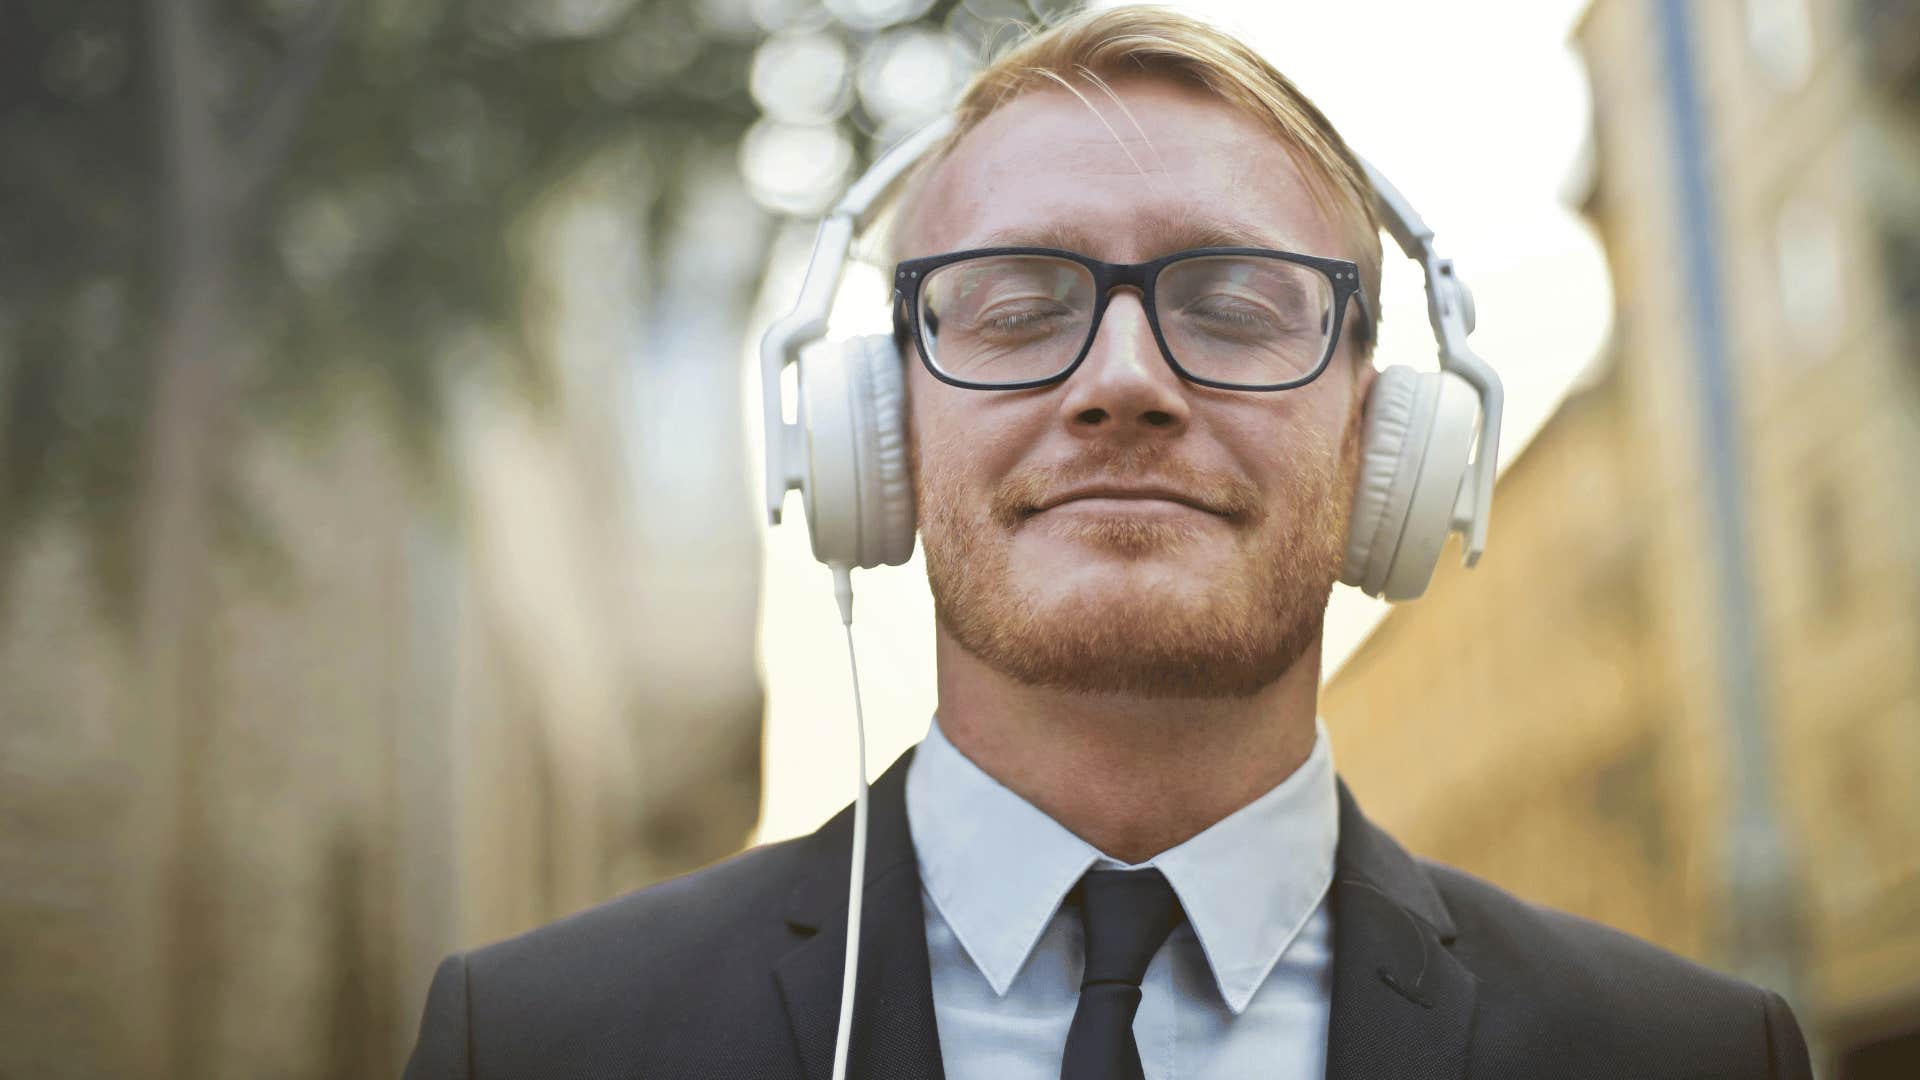 man wearing headphones zoning out